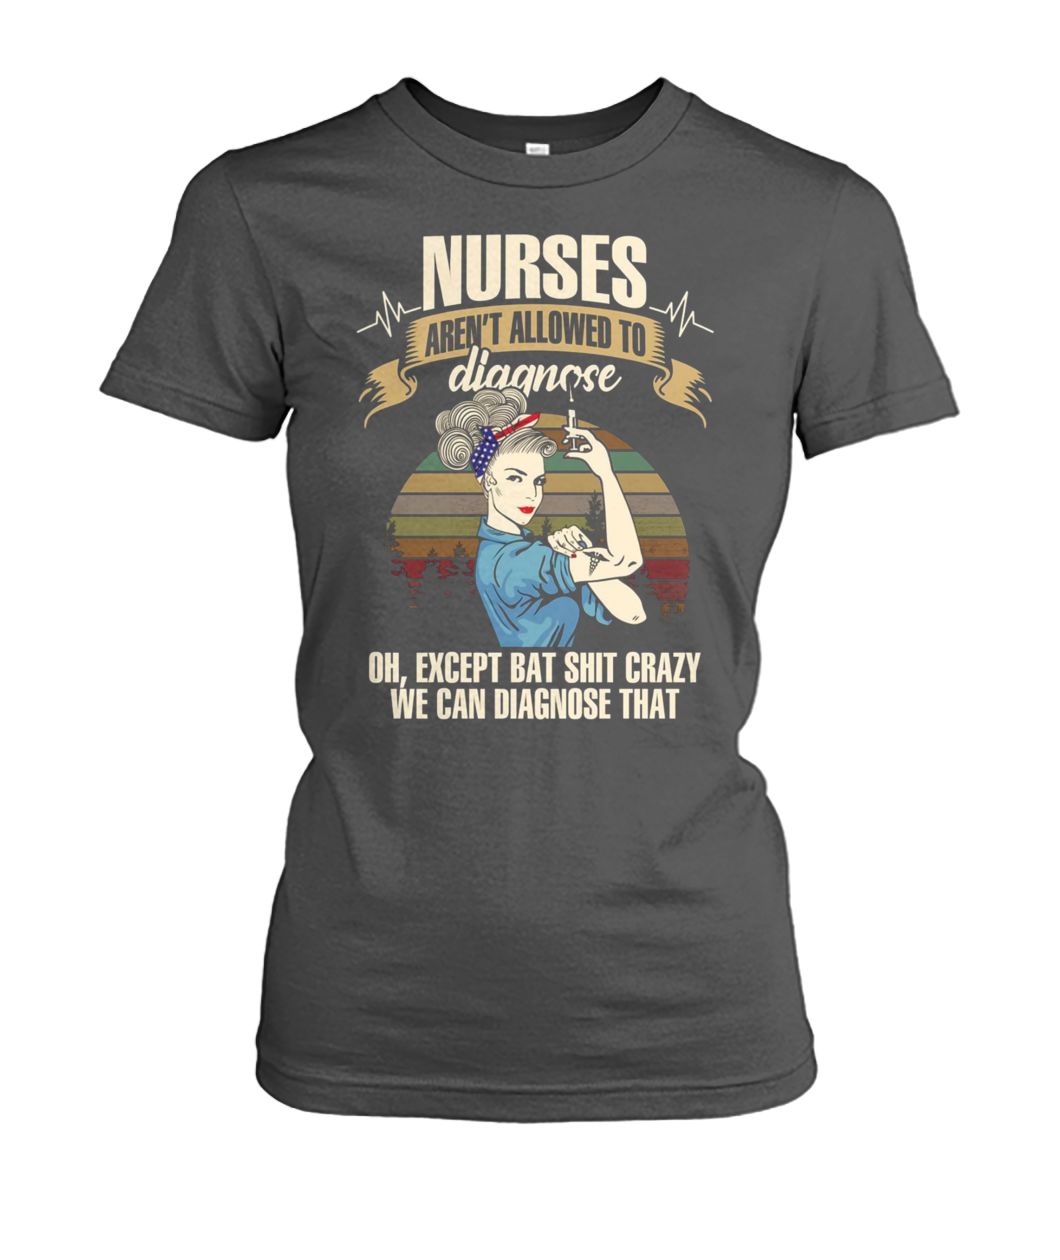 Vintage nurses aren't allowed to diagnose oh except bat shit crazy we can diagnose that nurselife women's crew tee